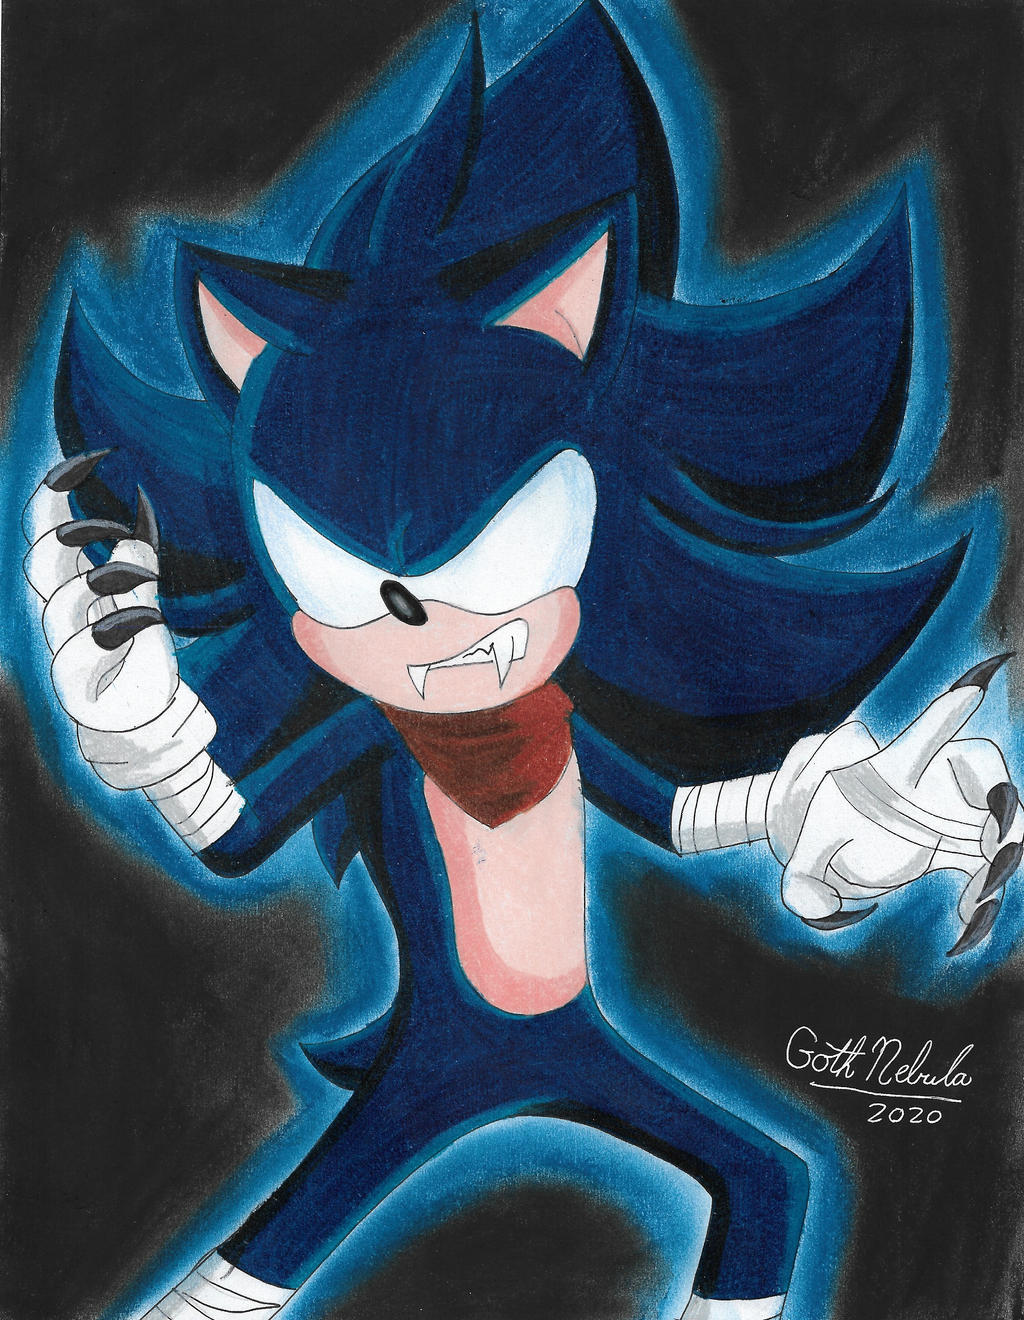 Dark sonic  Sonic, Sonic the hedgehog, Sonic fan art